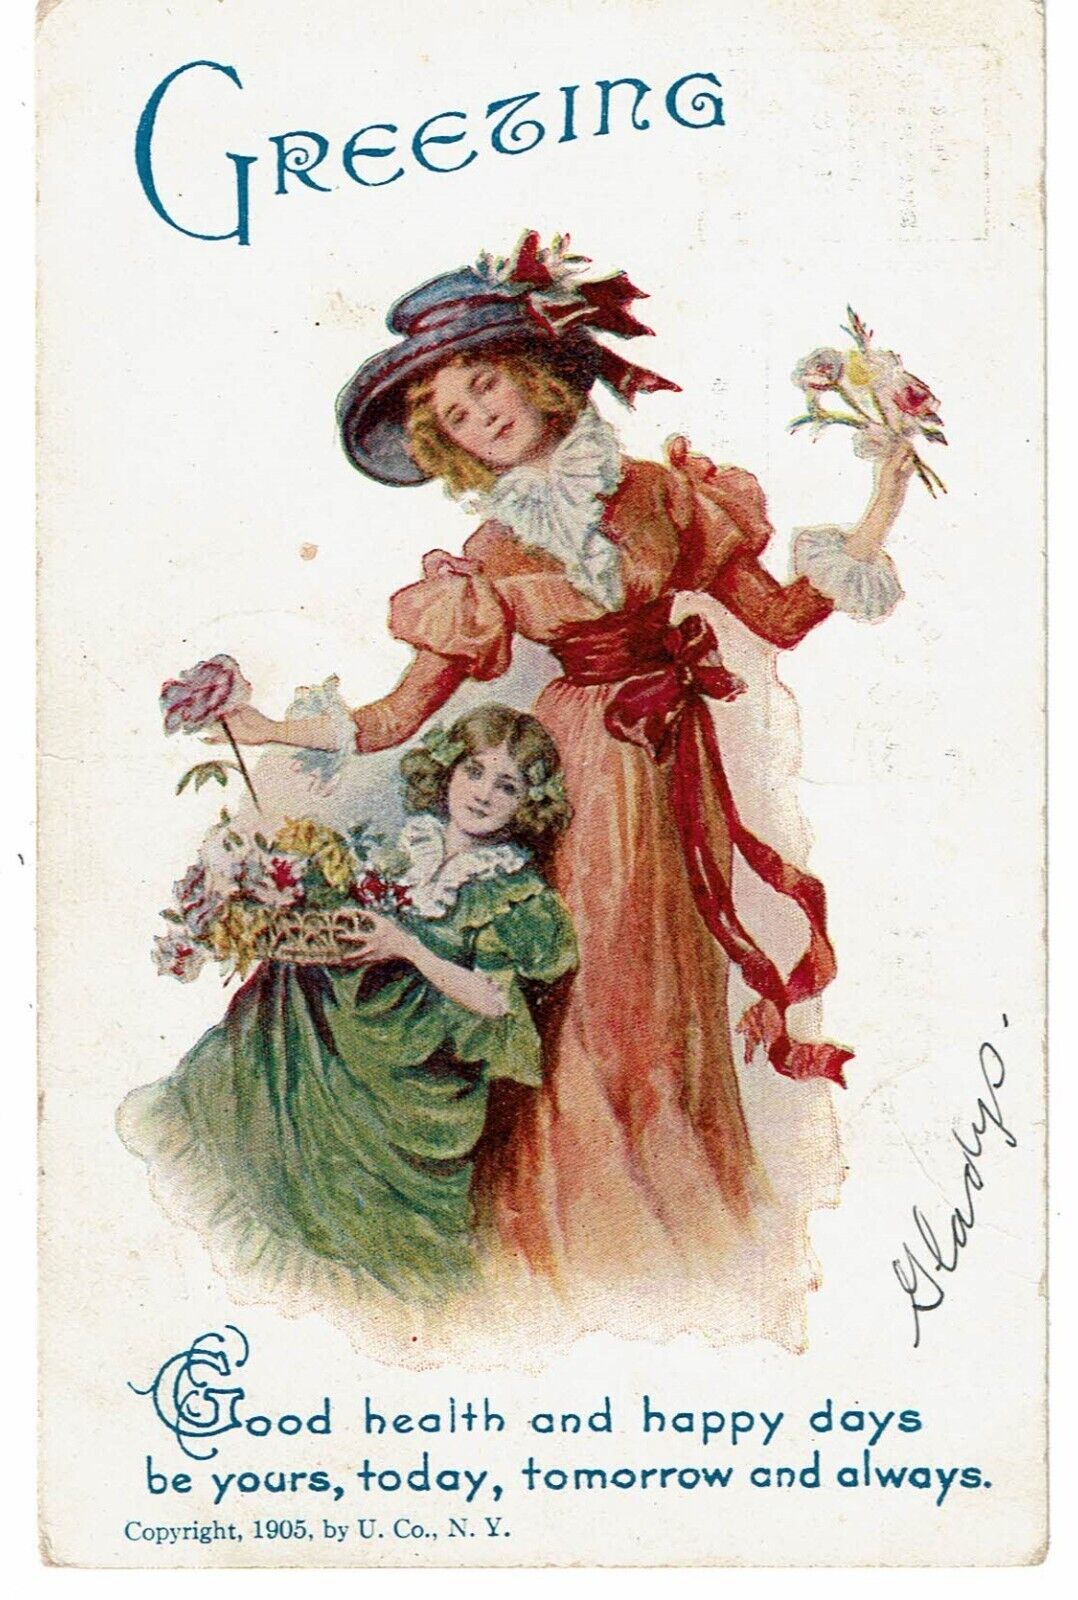 1905 Greeting good health happy days Victorian woman & child flowers Postcard